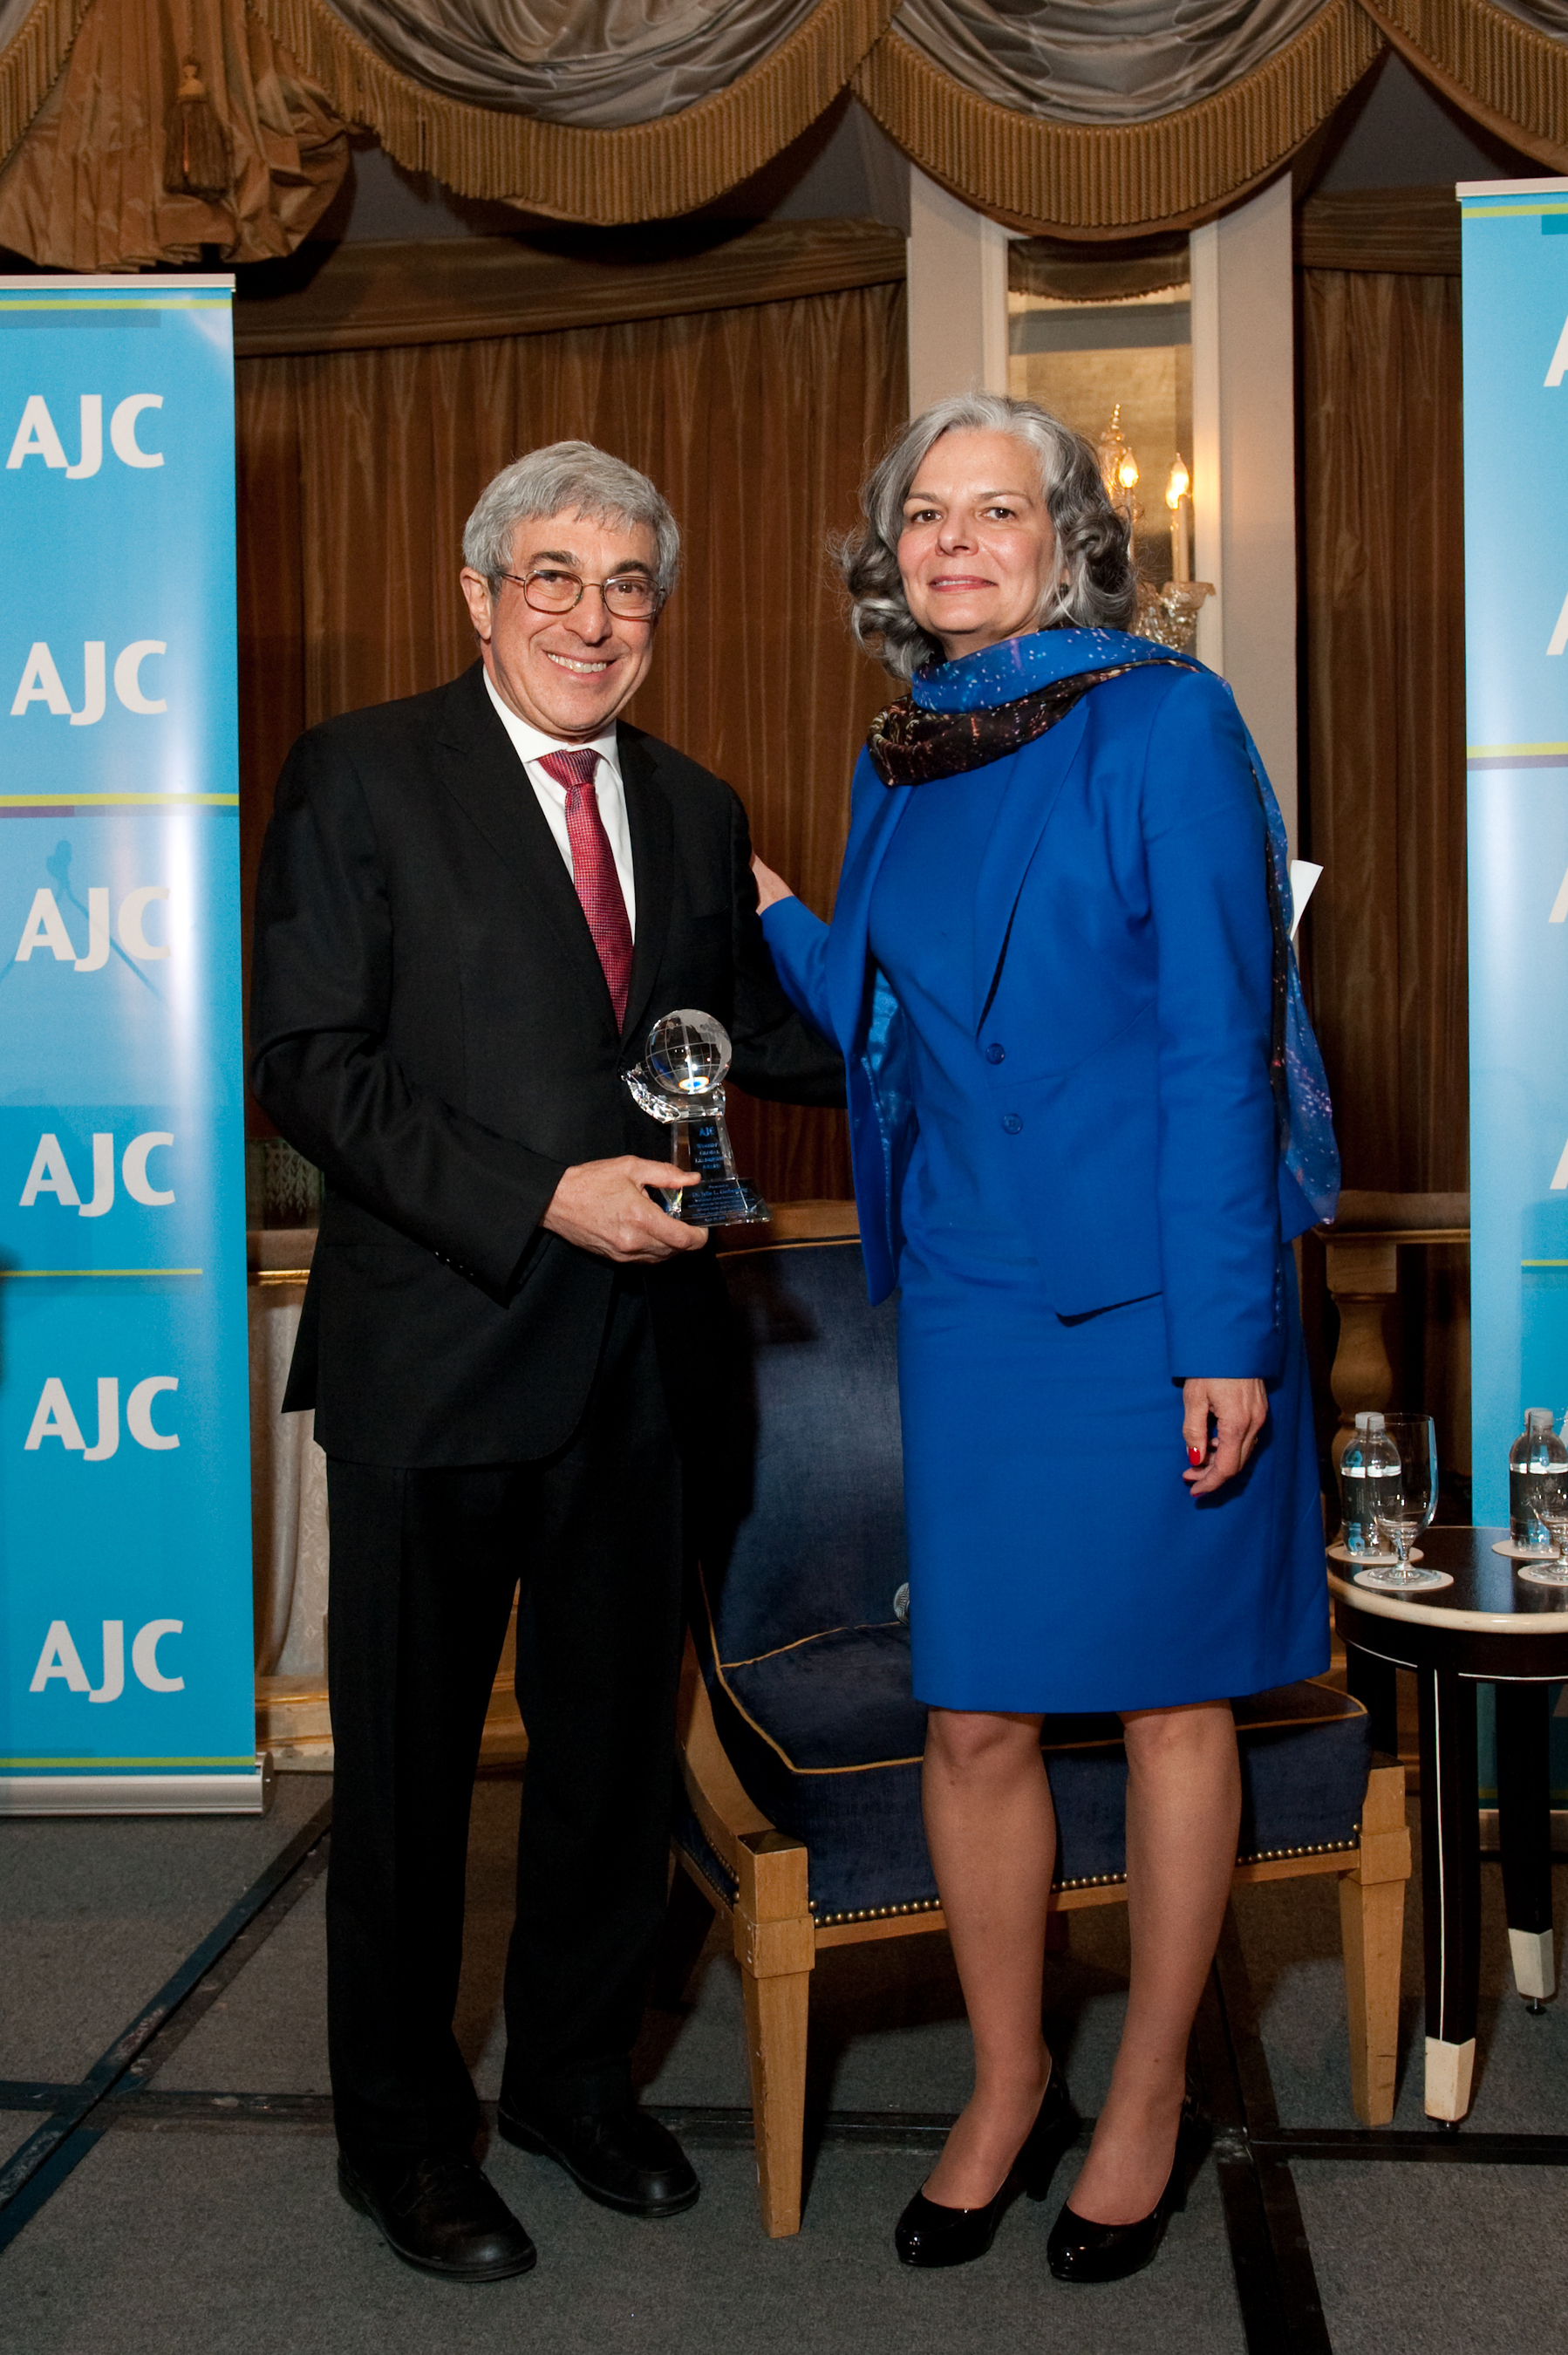 AJC President Stanley M. Bergman presents AJC Women's Global Leadership Award to Dr. Julie L. Gerberding, president of Merck Vaccines. (PRNewsFoto/American Jewish Committee)